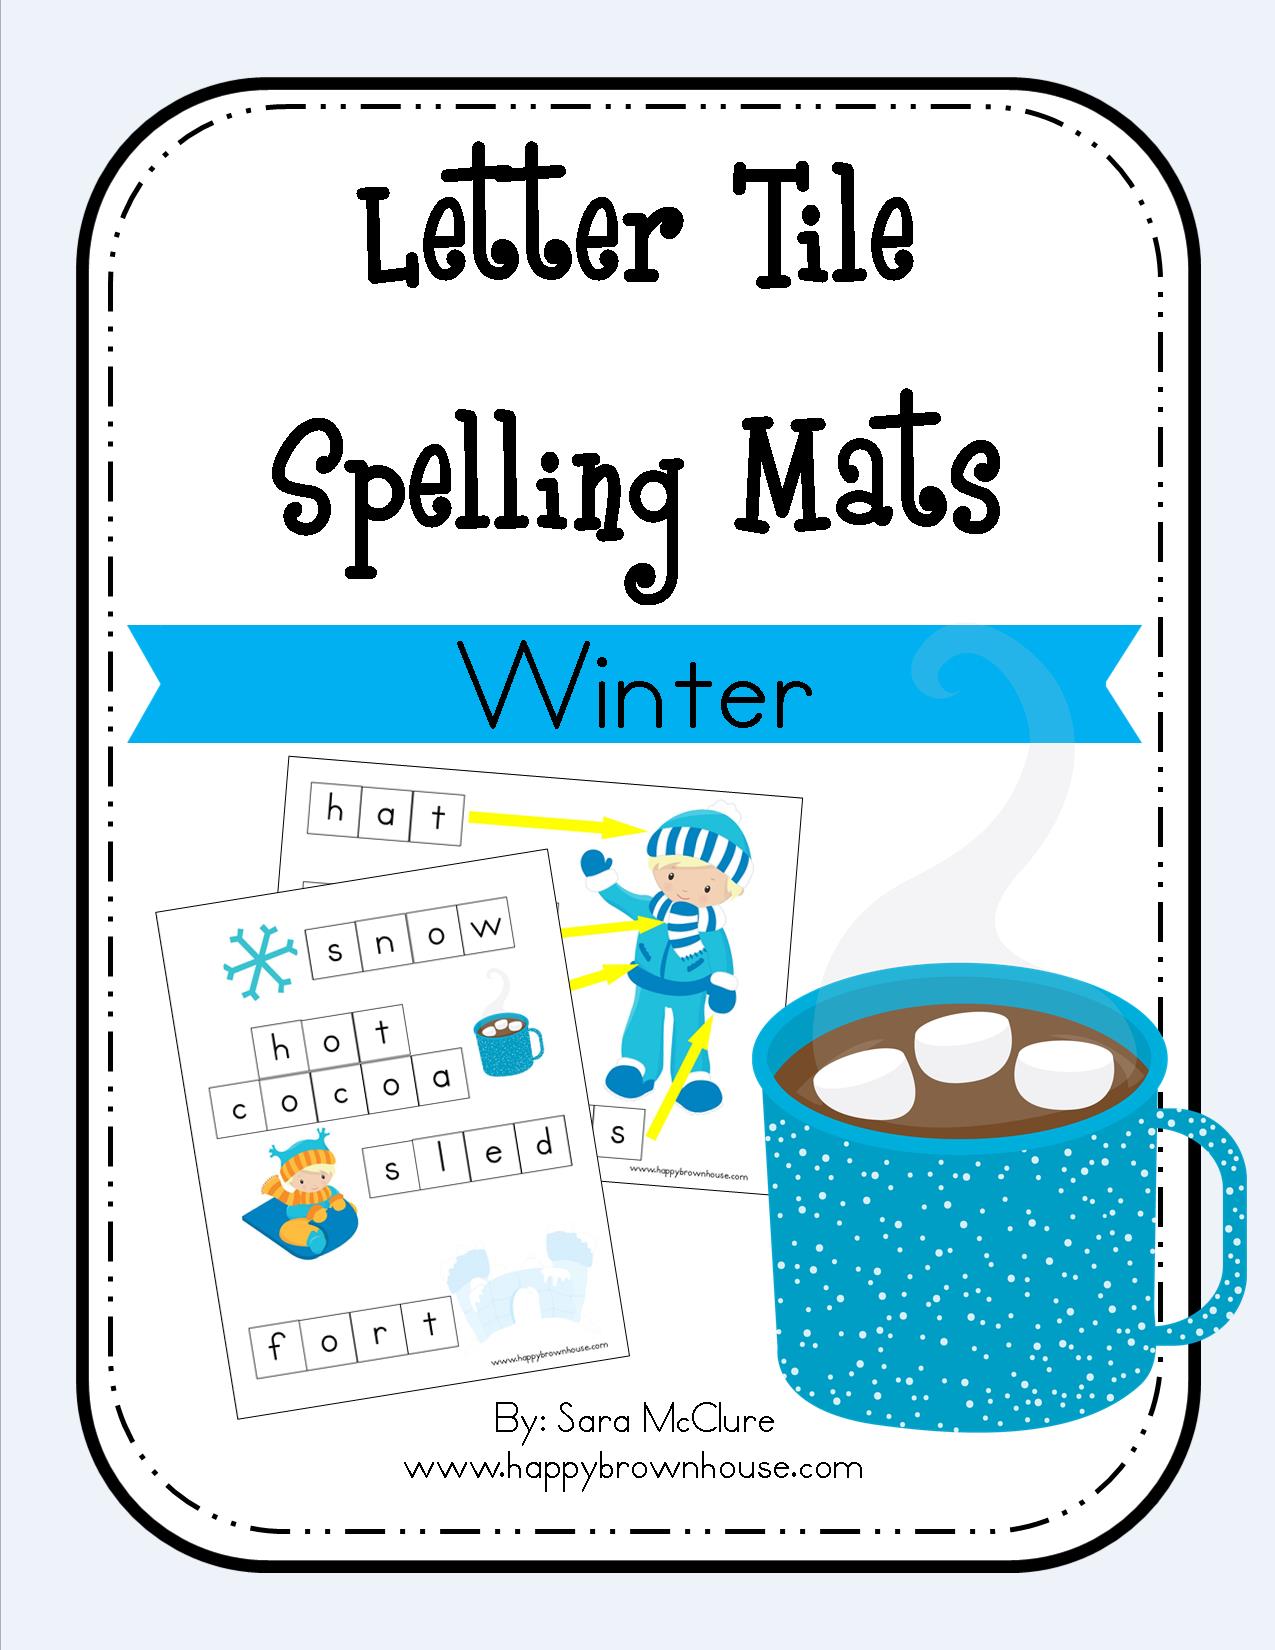 Winter Letter Tiles Spelling Mats | Happy Brown House